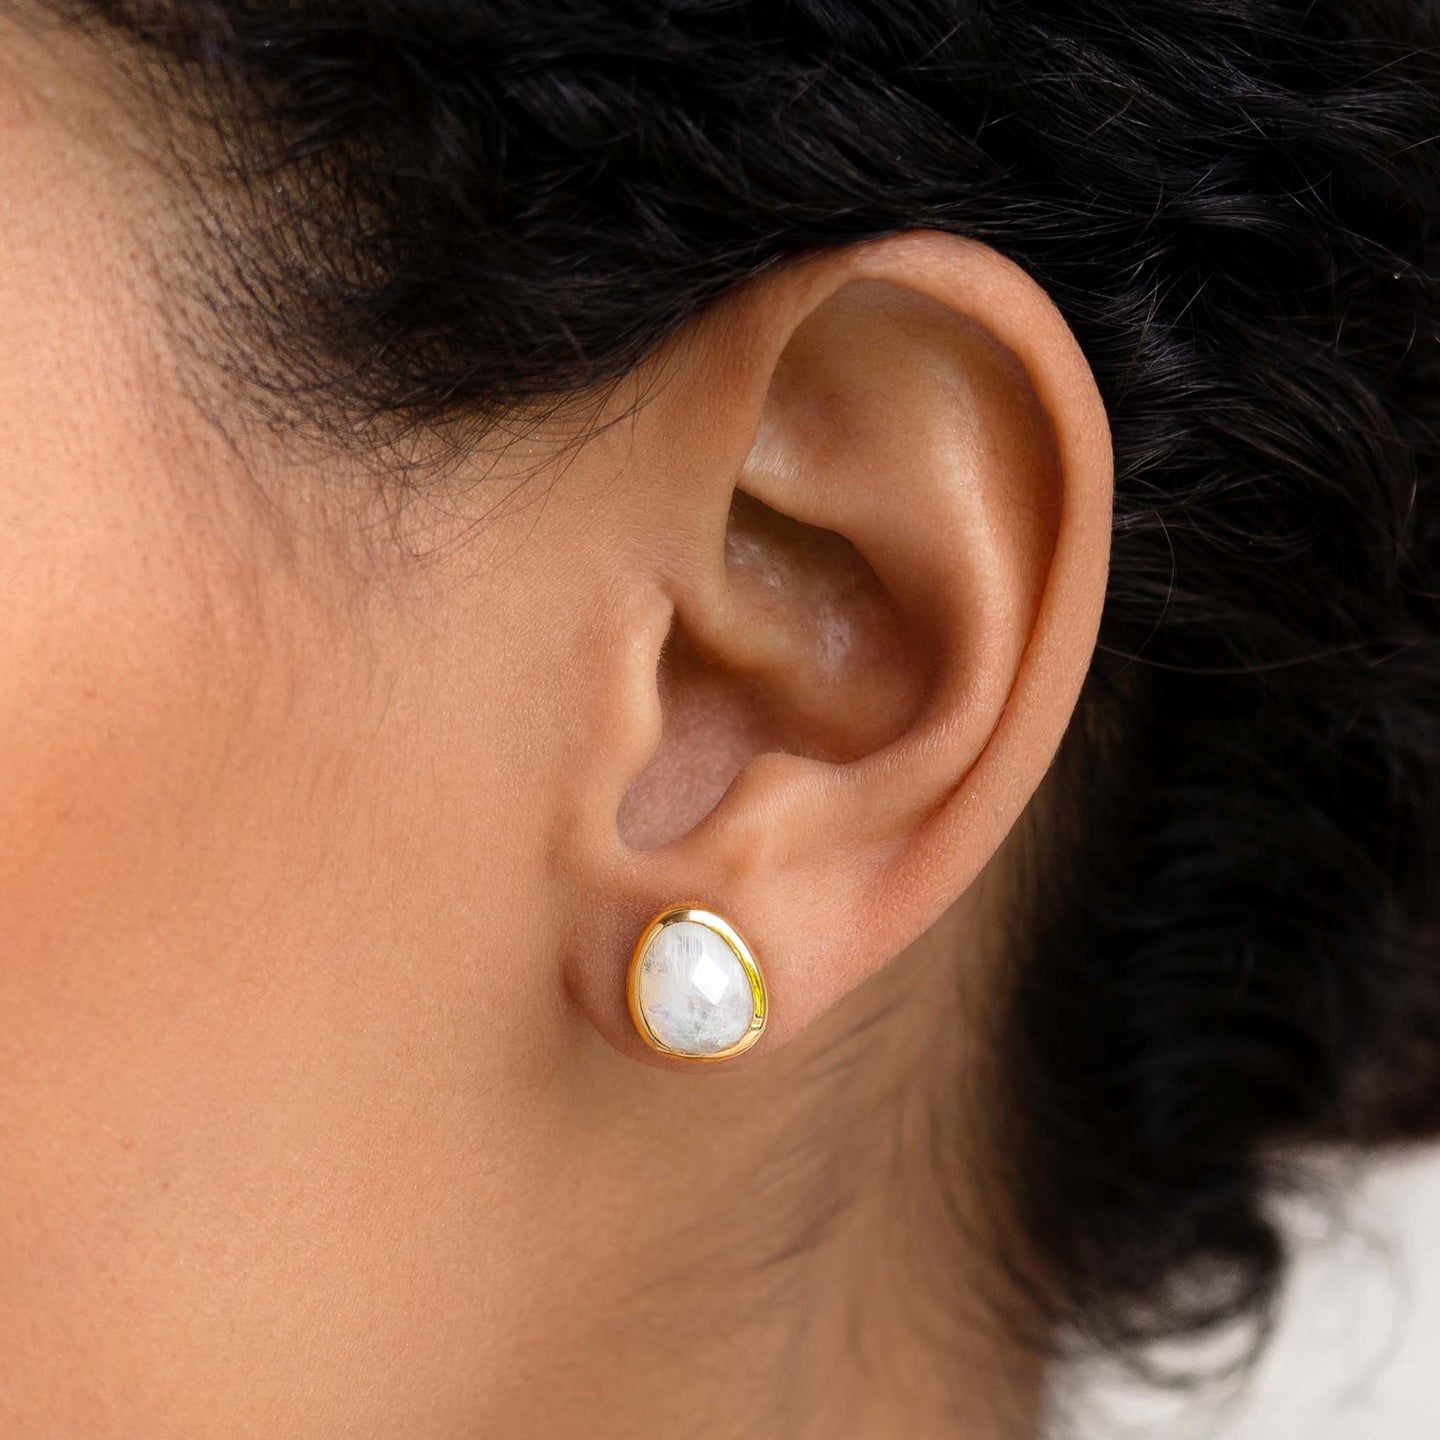 Buy White Moonstone Stud Earrings, 14K Gold Filled Moonstone Earrings, 6 Mm  Moonstone Post Earrings for Women Moonkist Creations Online in India - Etsy